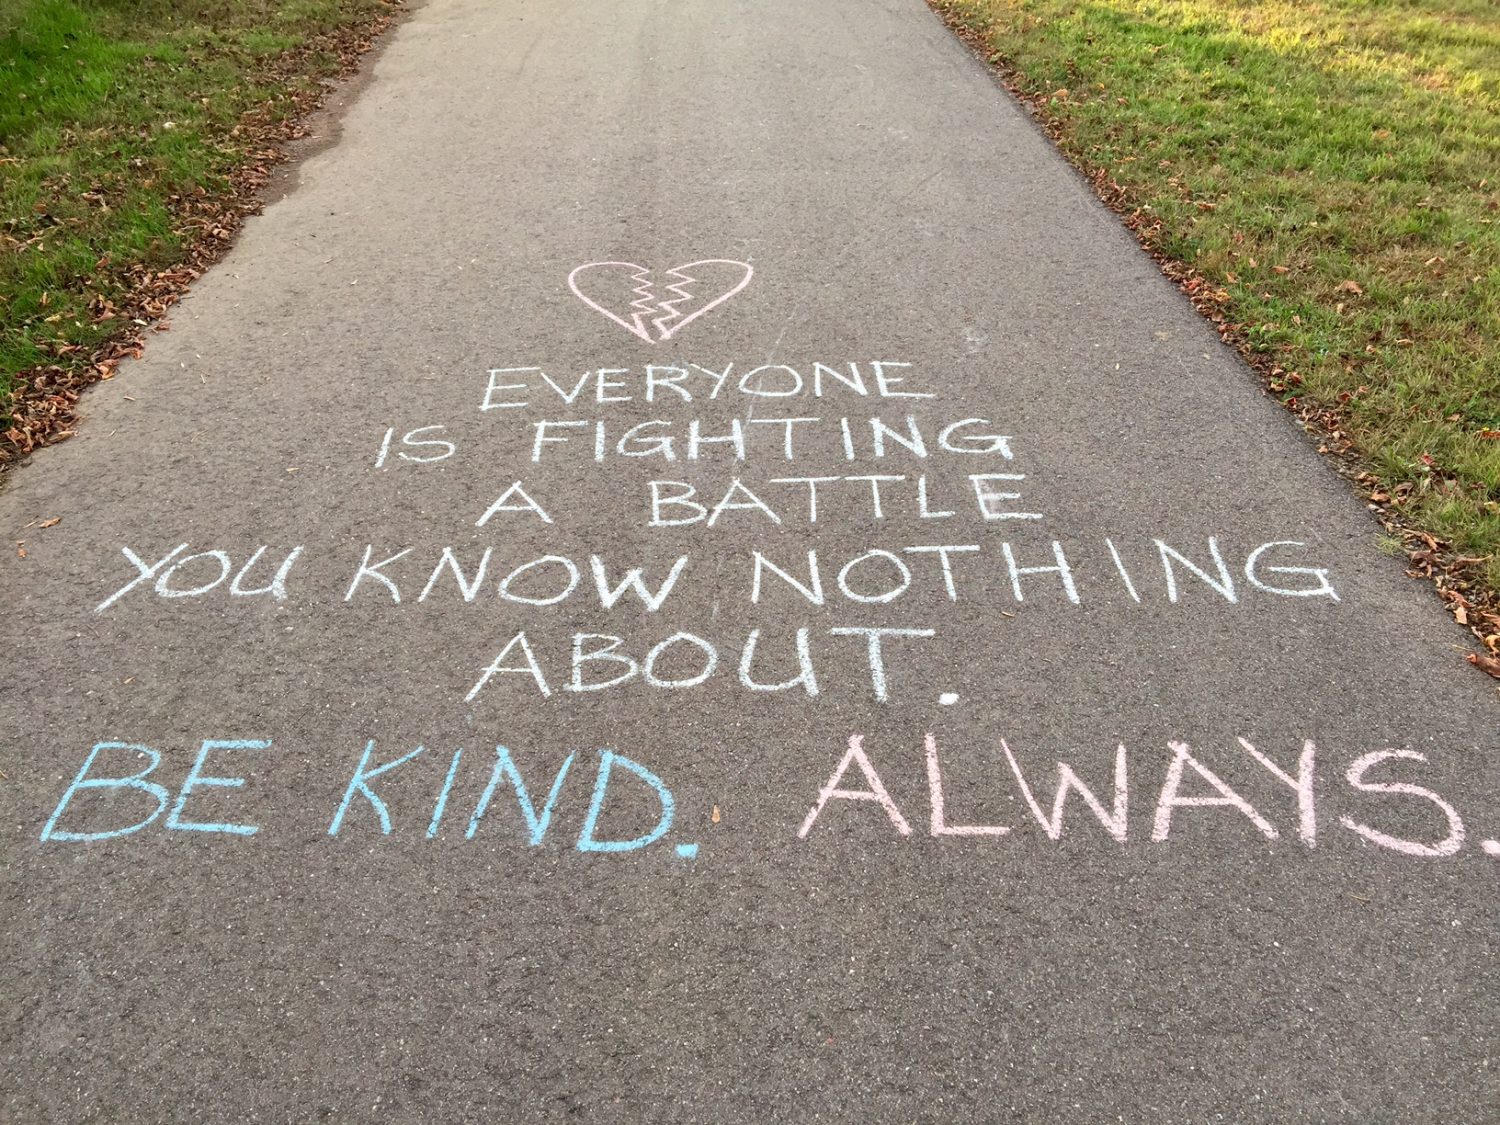 Mental Health Coalition creates awareness through chalk art messages